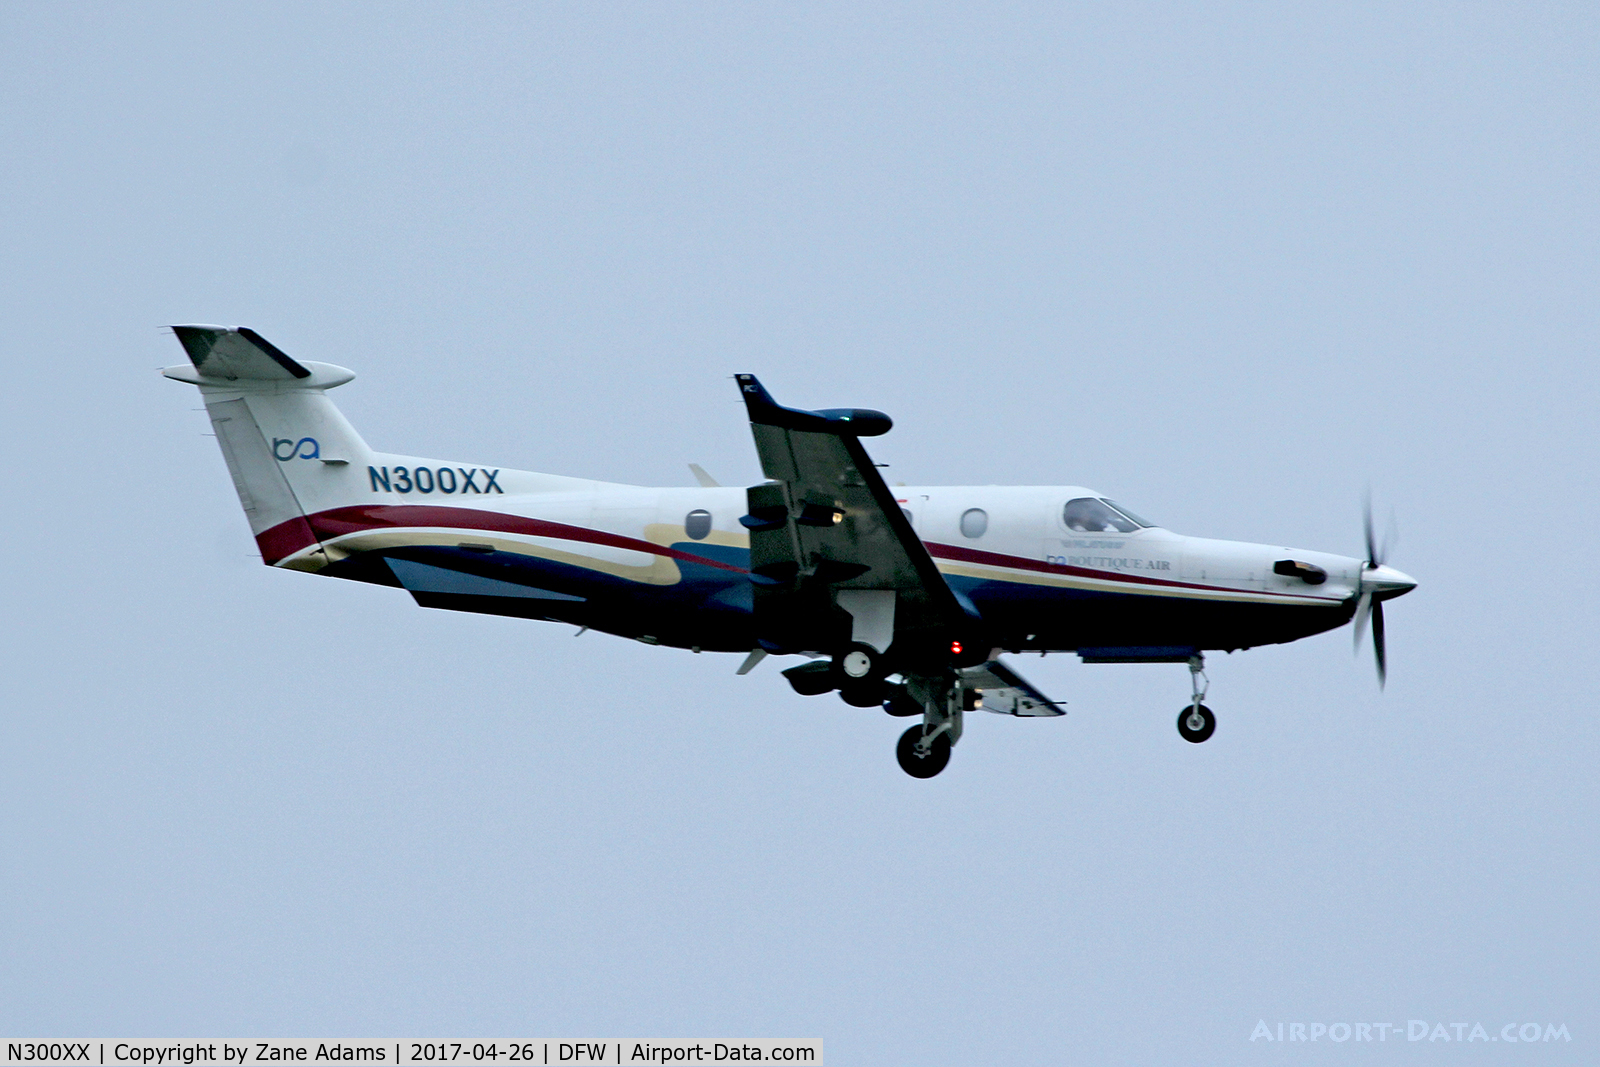 N300XX, 2002 Pilatus PC-12/45 C/N 464, Arriving at DFW Airport